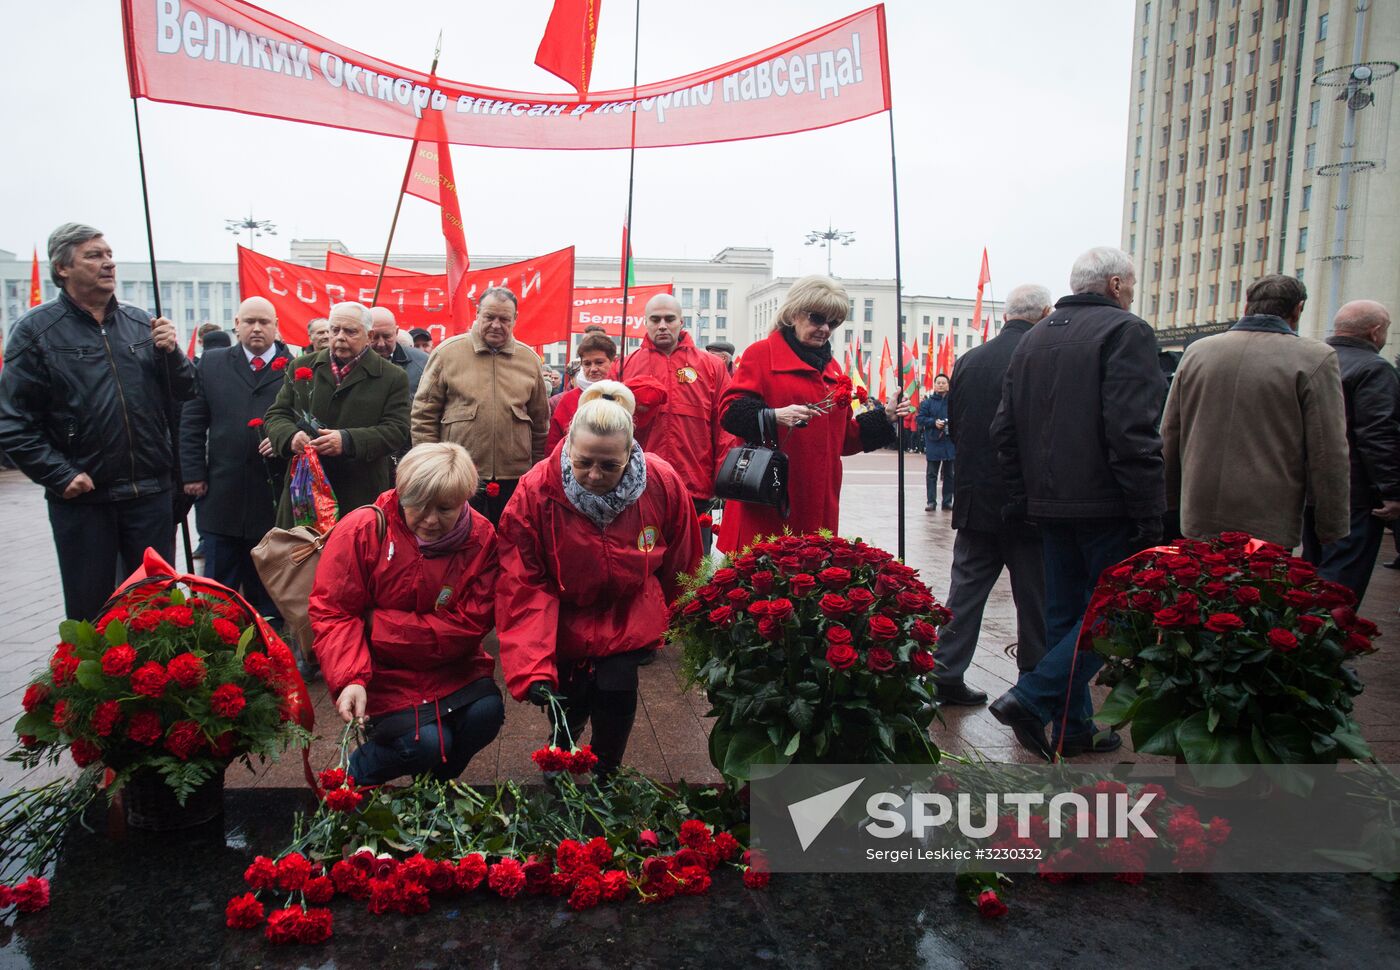 Rally in Minsk to mark 100th anniversary of October Revolution